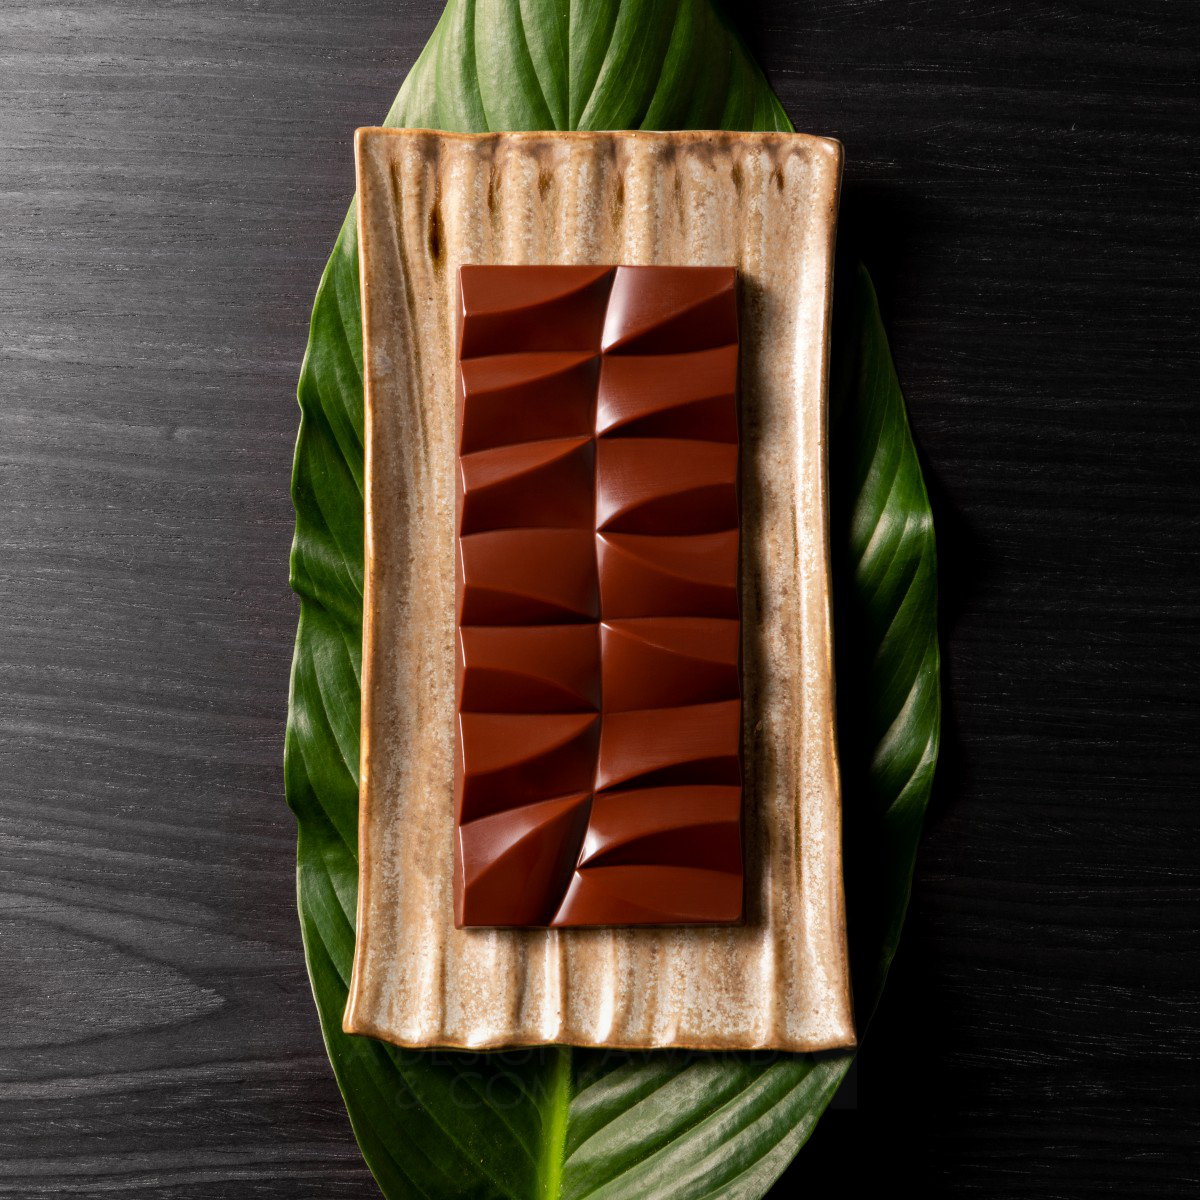 Dengo Chocolate Bar by Brazil  amp  Murgel